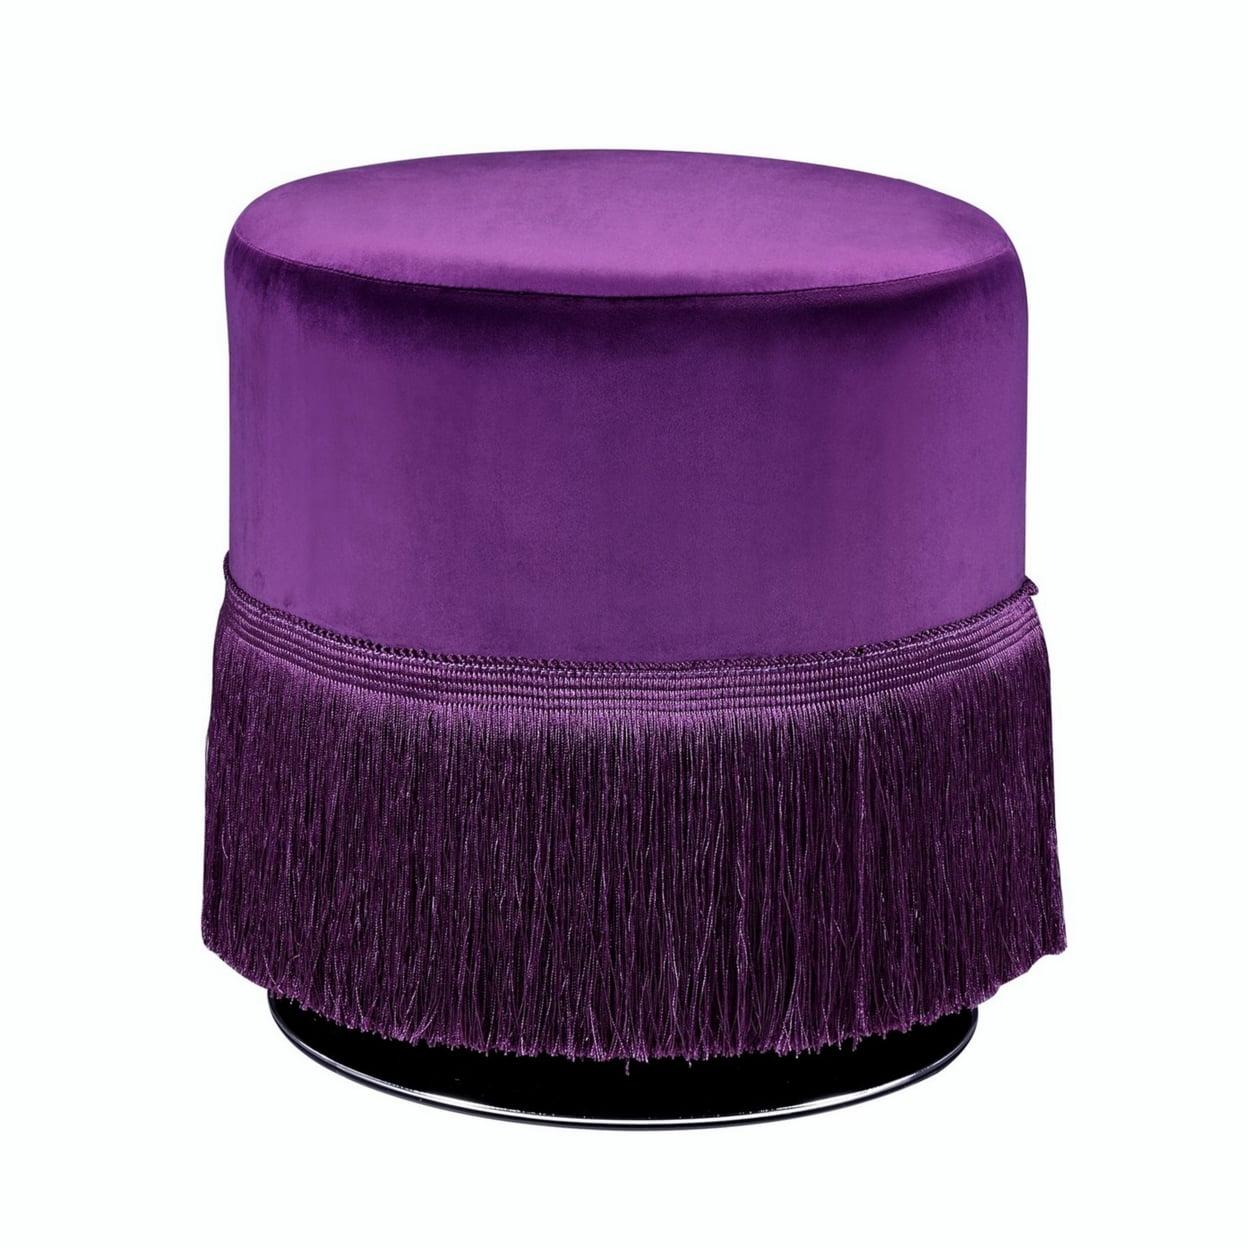 Purple Velvet Tufted Round Ottoman with Metal Base